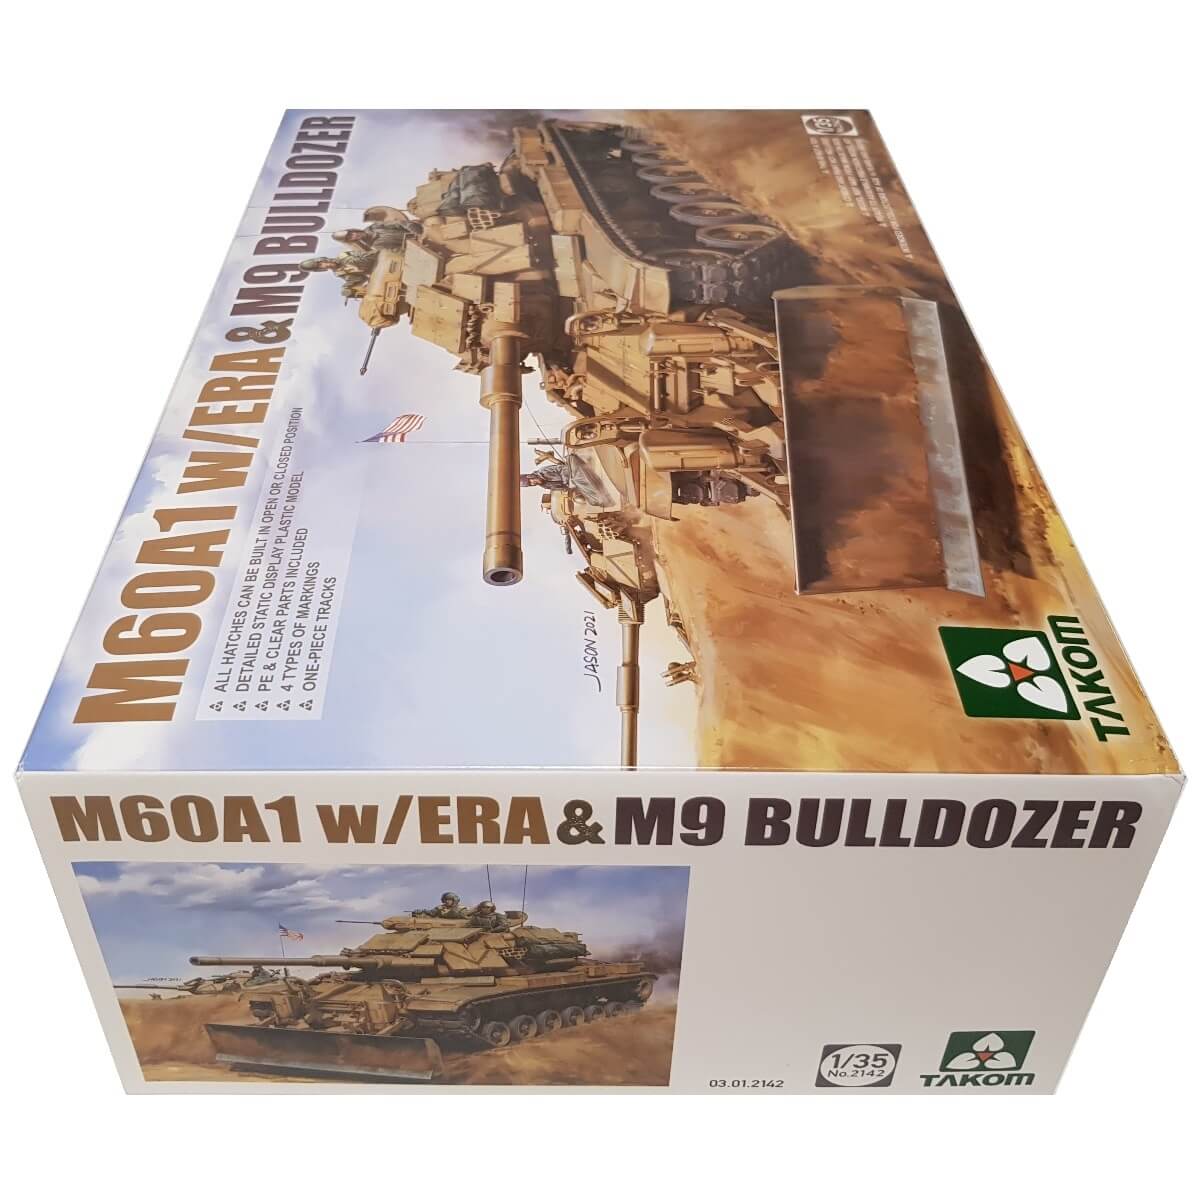 1:35 M60A1 with ERA and M9 Bulldozer - TAKOM